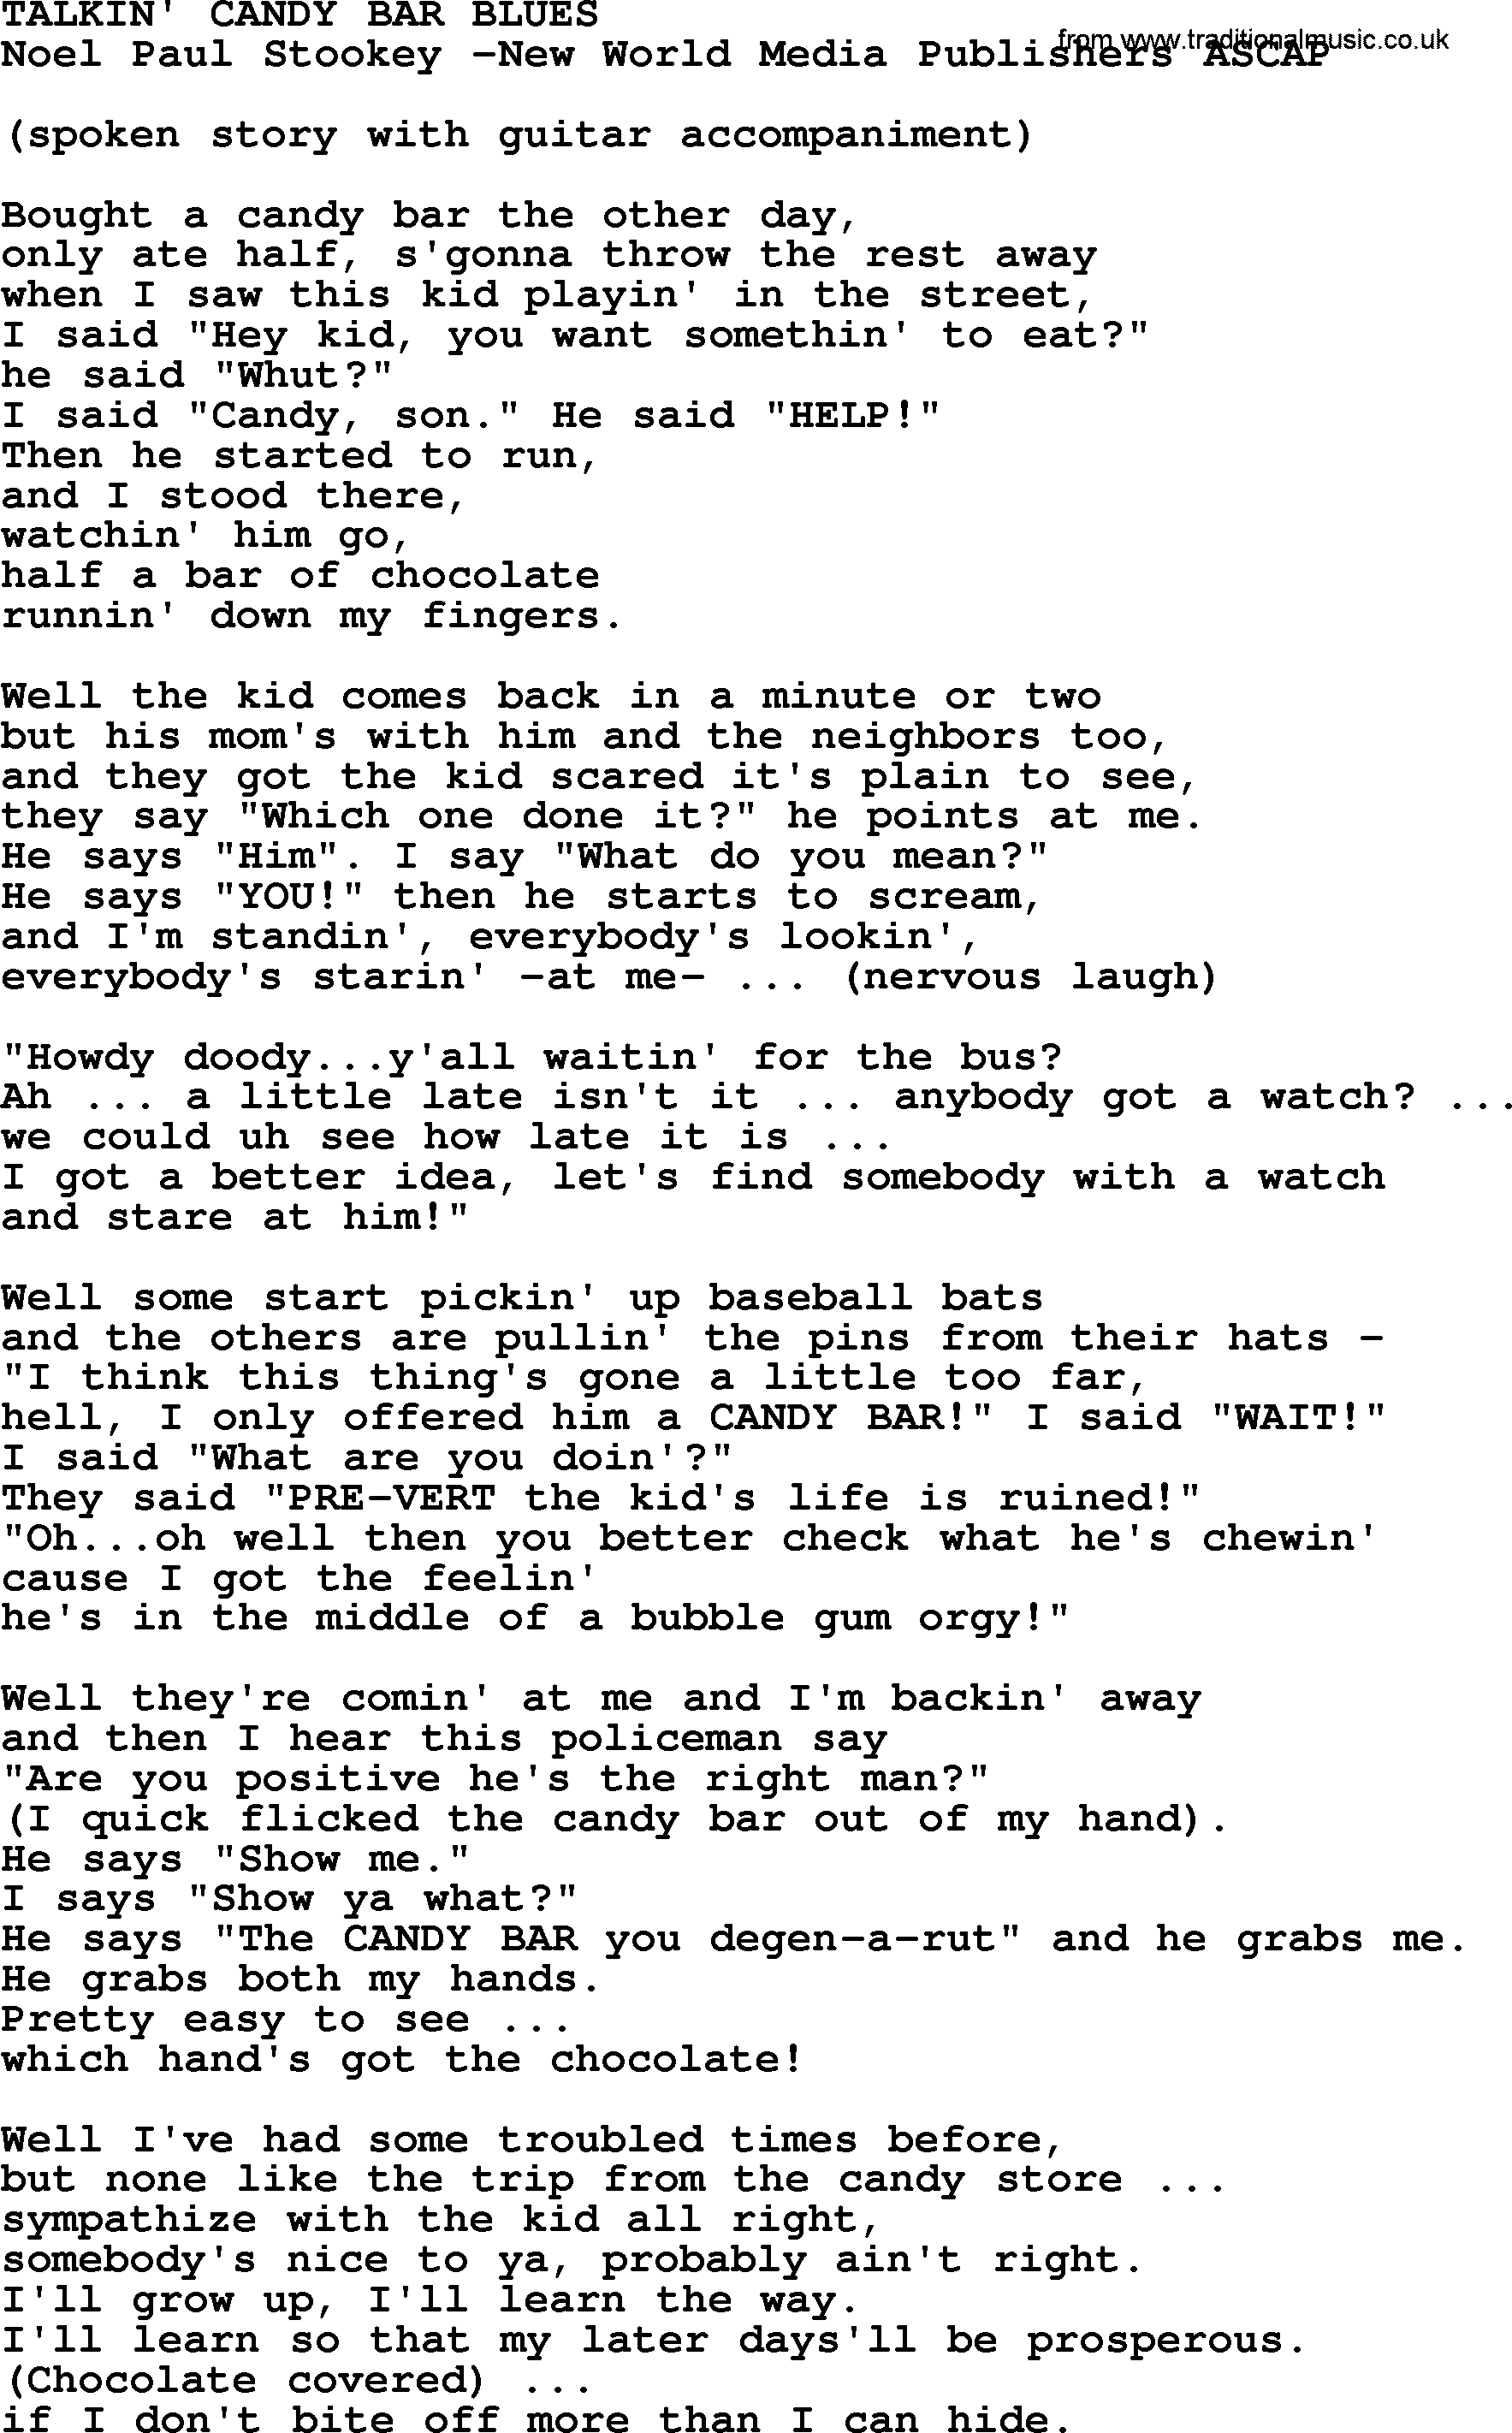 Peter, Paul and Mary song Talkin Candy Bar Blues lyrics